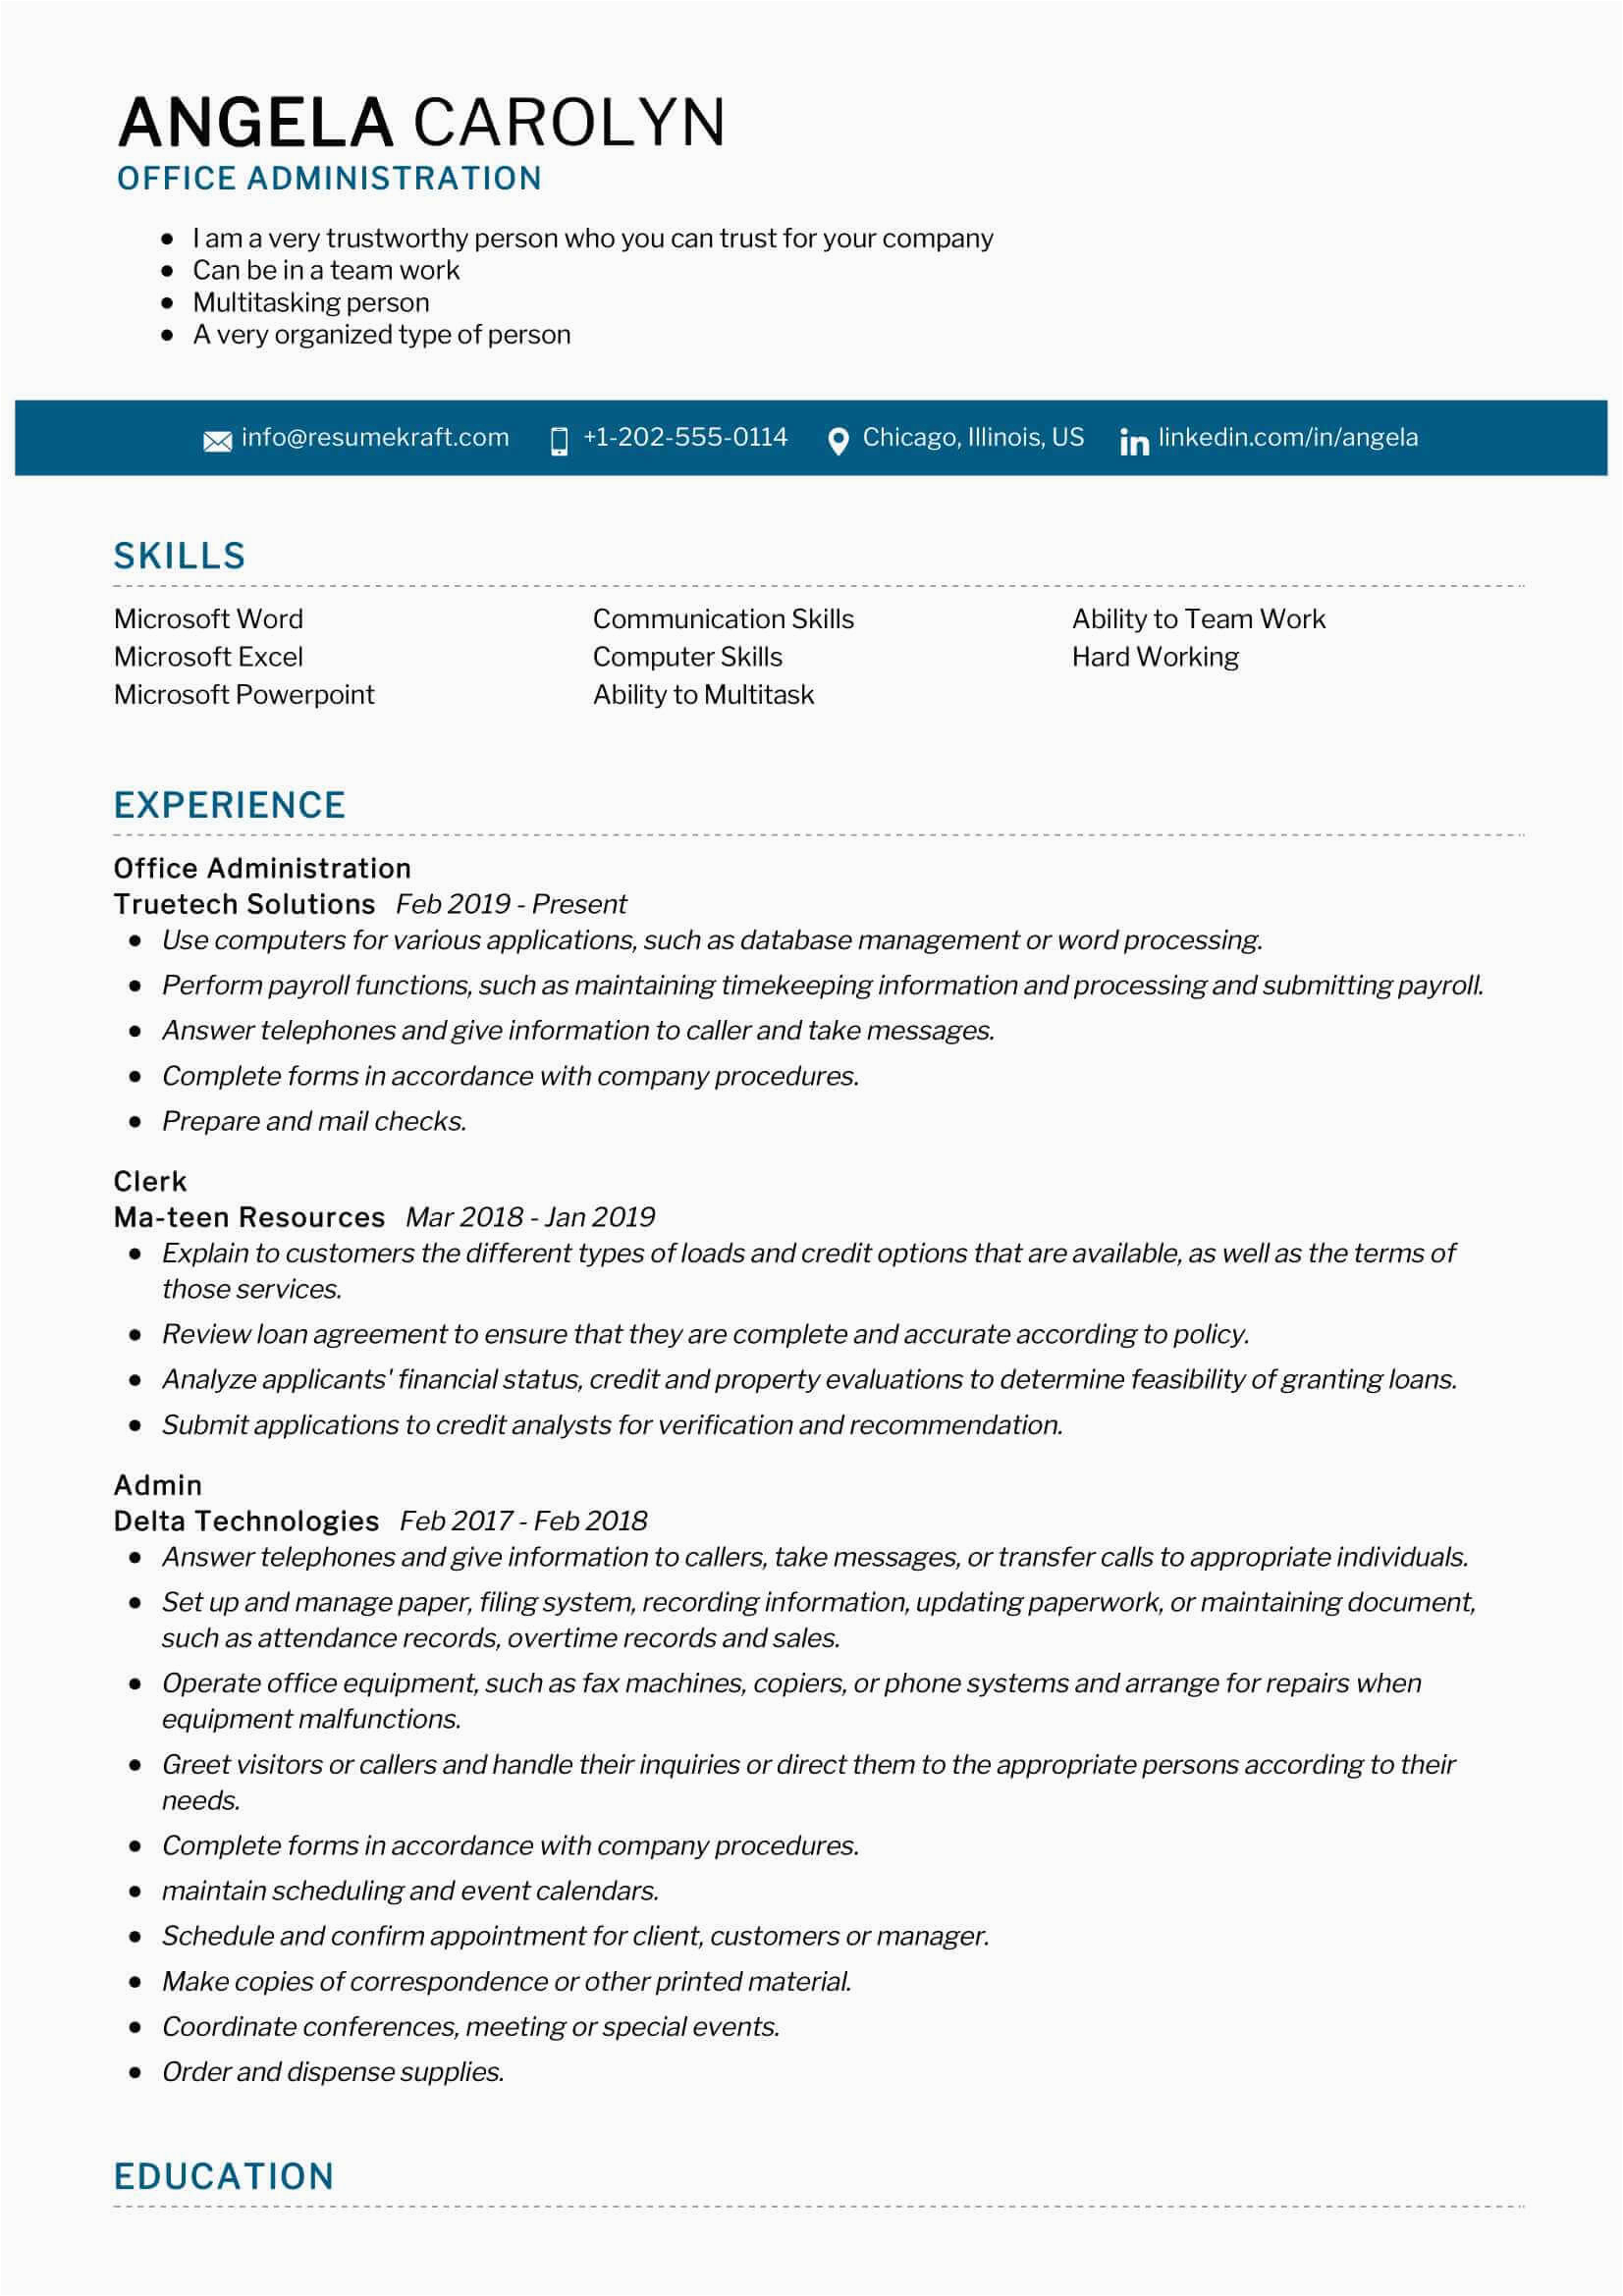 Sample Resume for Office Administration Job Fice Administration Resume Sample 2021